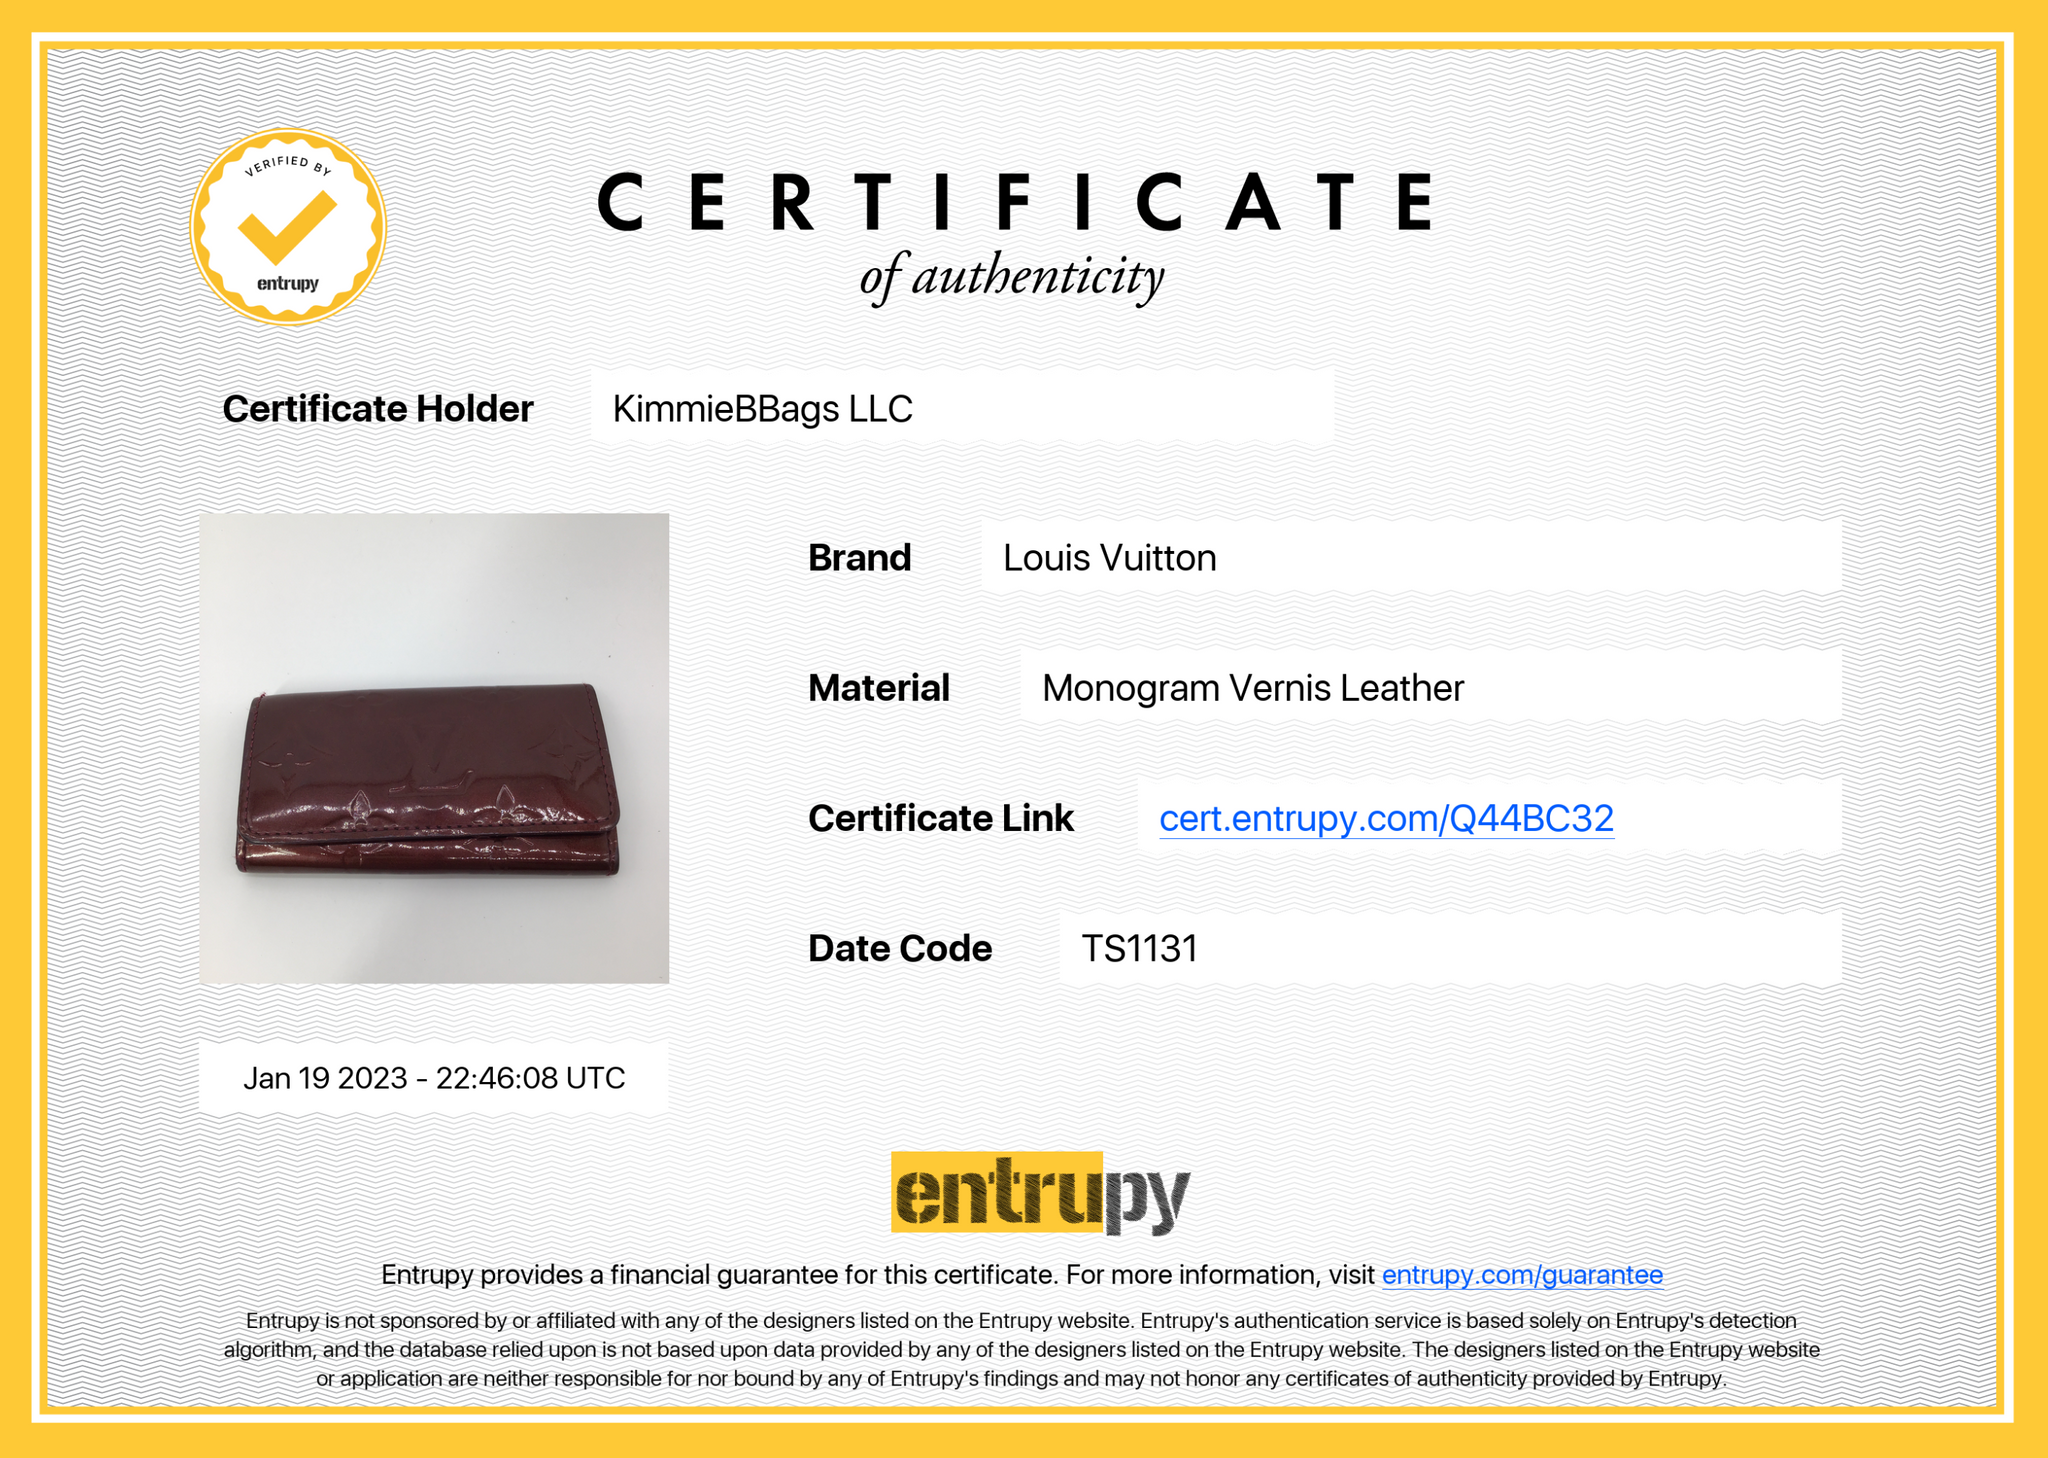 Louis Vuitton Green Taiga Leather Multicless 4 Key Holder Wallet Case  11LVA1111